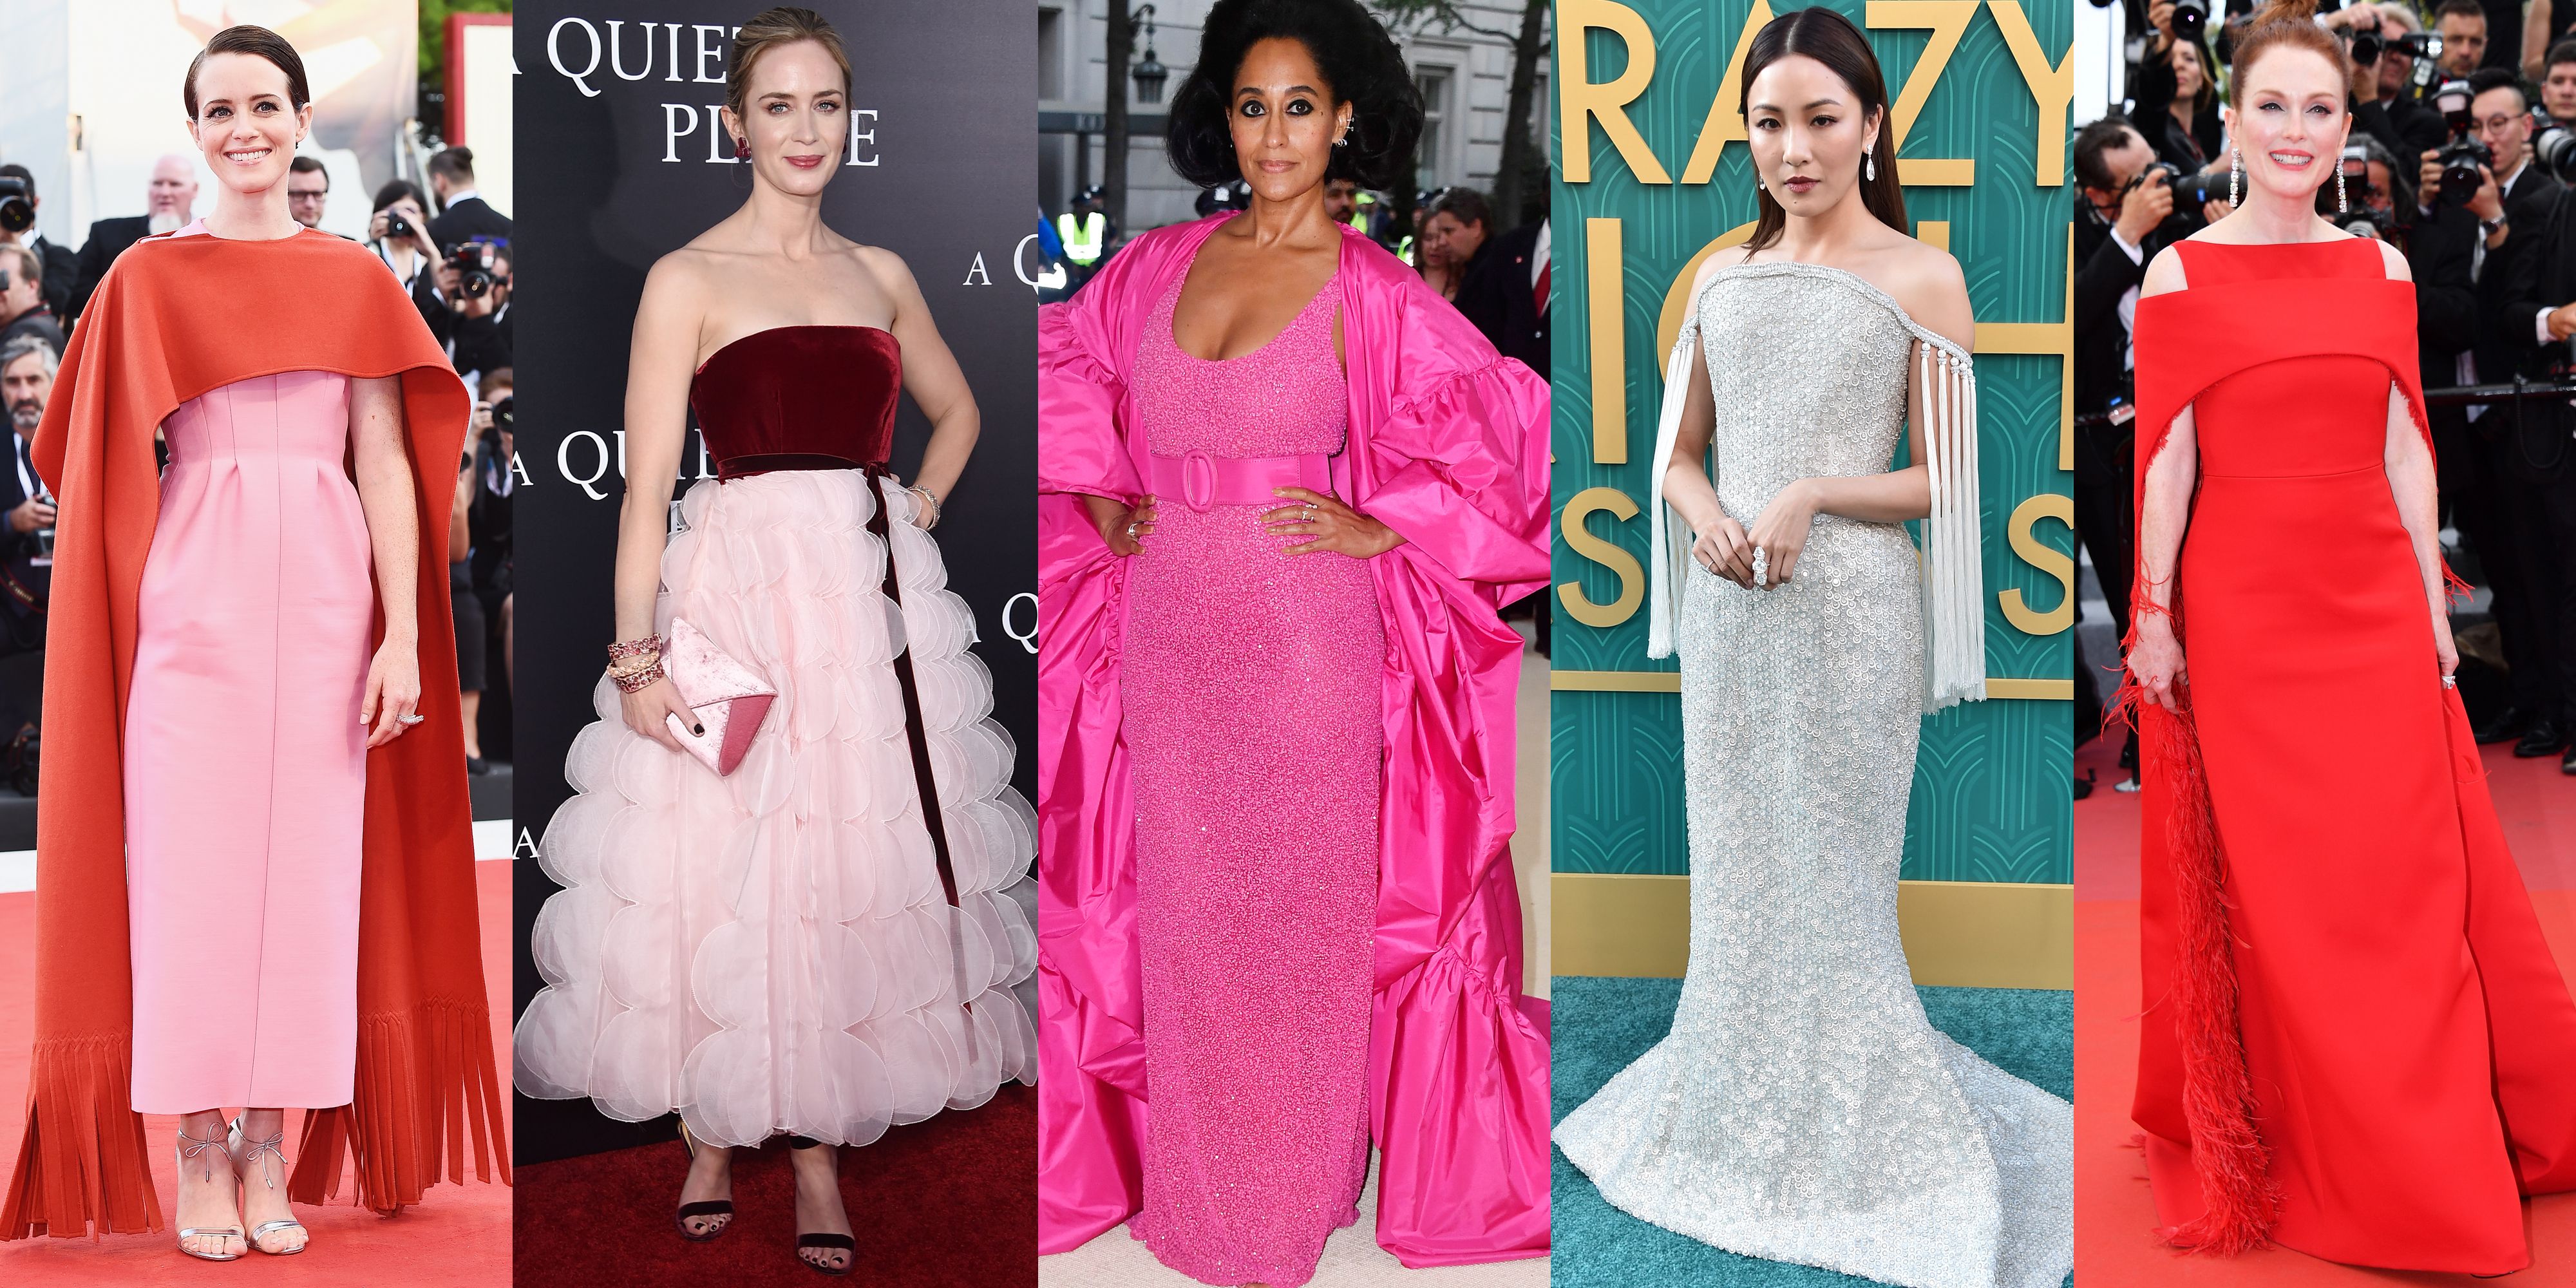 Cinderella Dresses at Cannes Film Festival 2017 - Kirsten Dunst, Diane  Kruger and More Celebs in Princess Gowns at Cannes